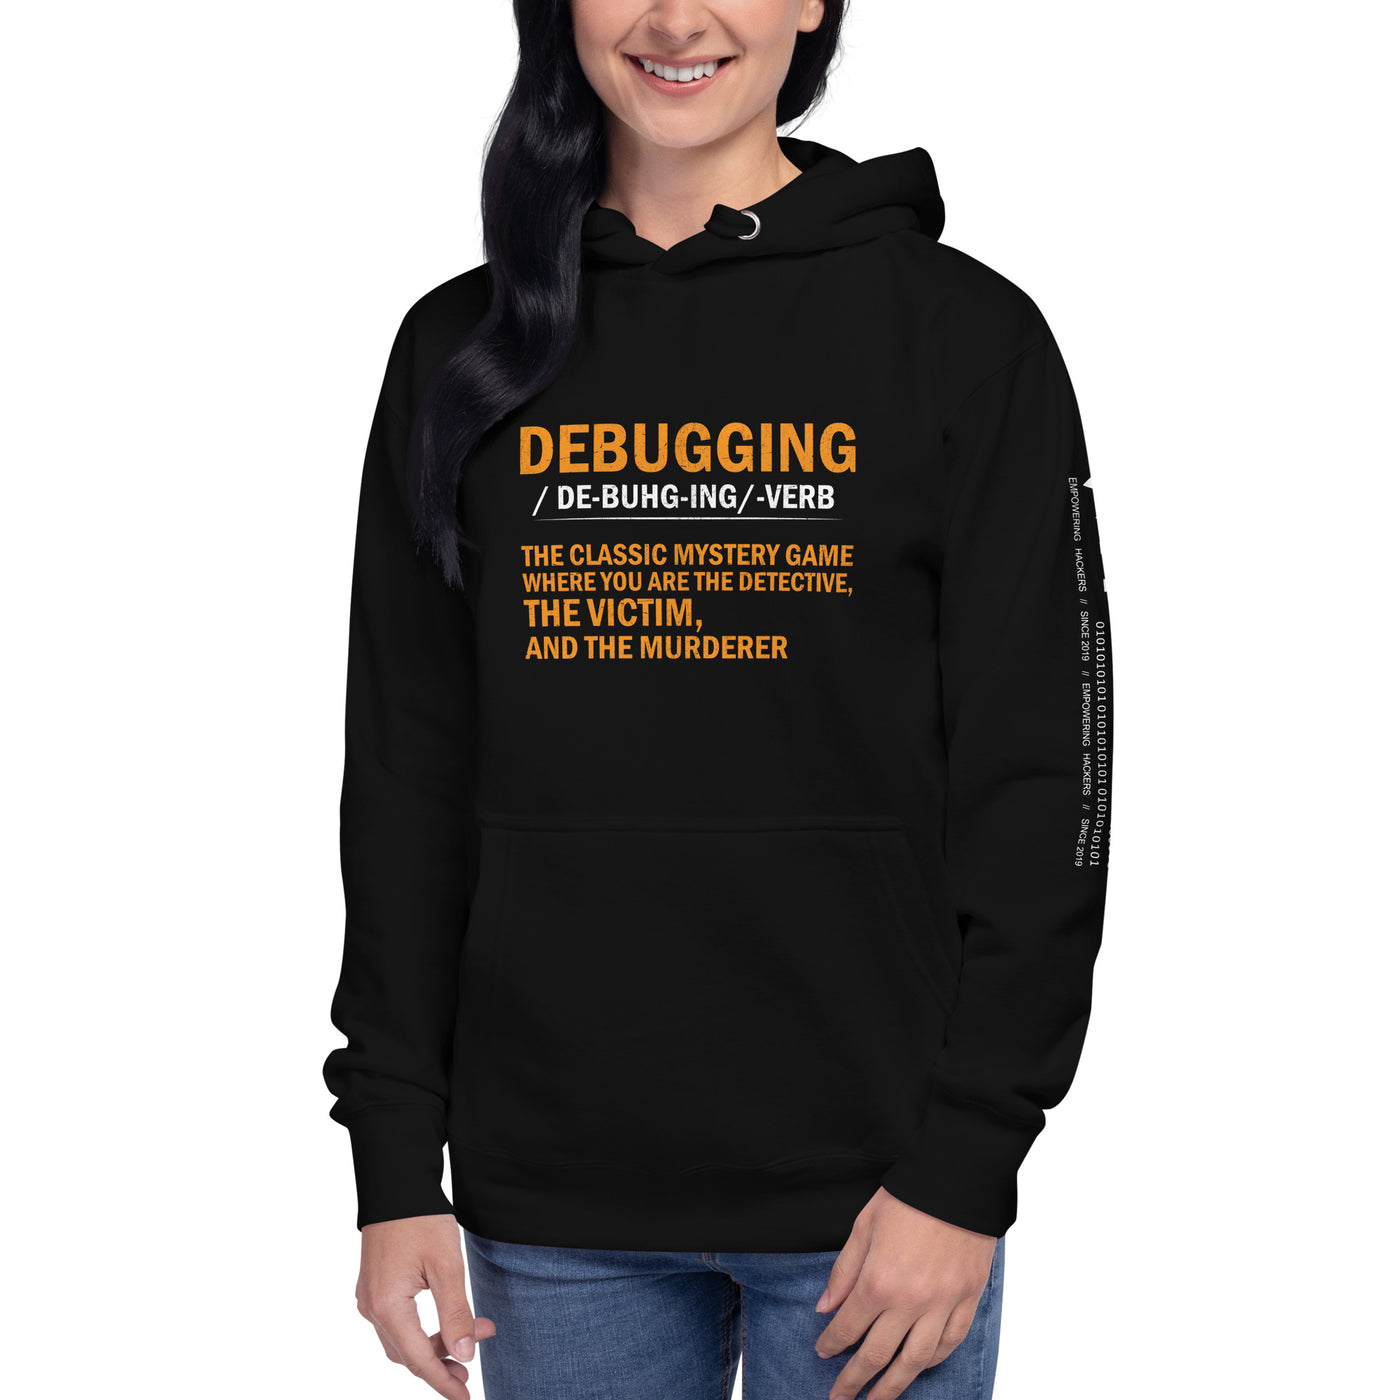 Debugging definition ( Orange Text ) - Unisex Hoodie